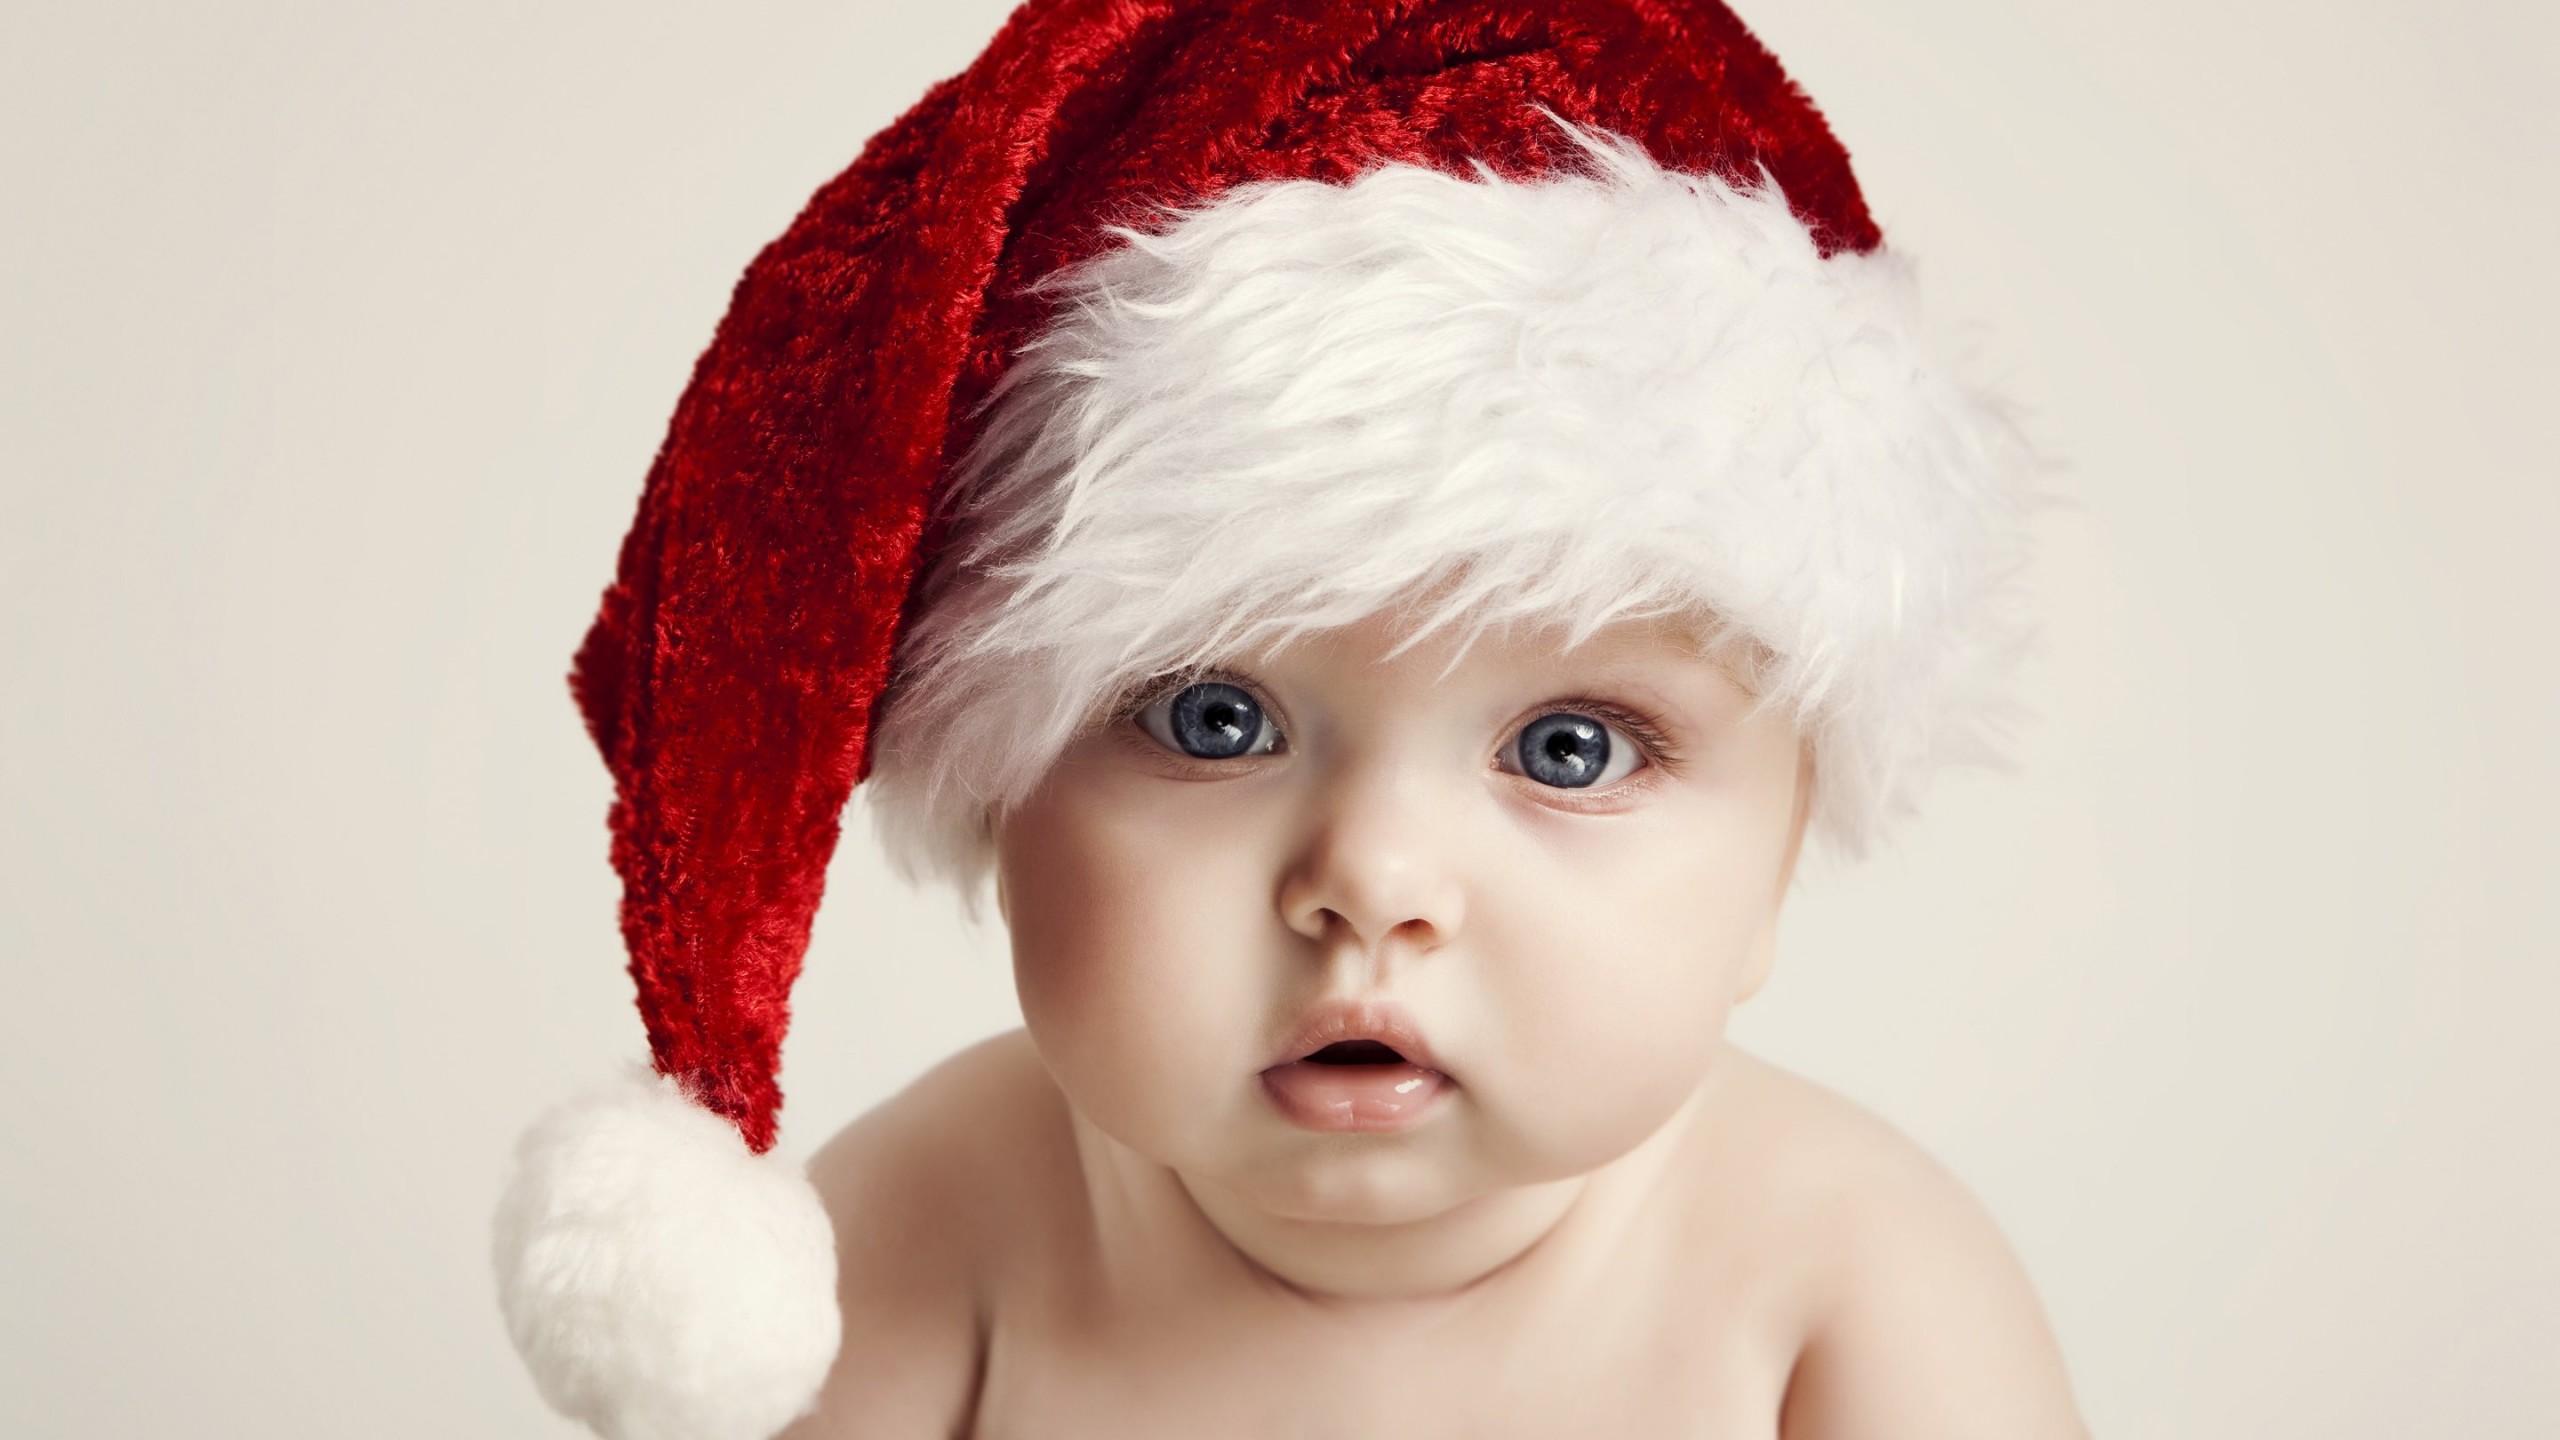 Santa Claus Baby Boy Wallpaper for Social Media YouTube Channel Art